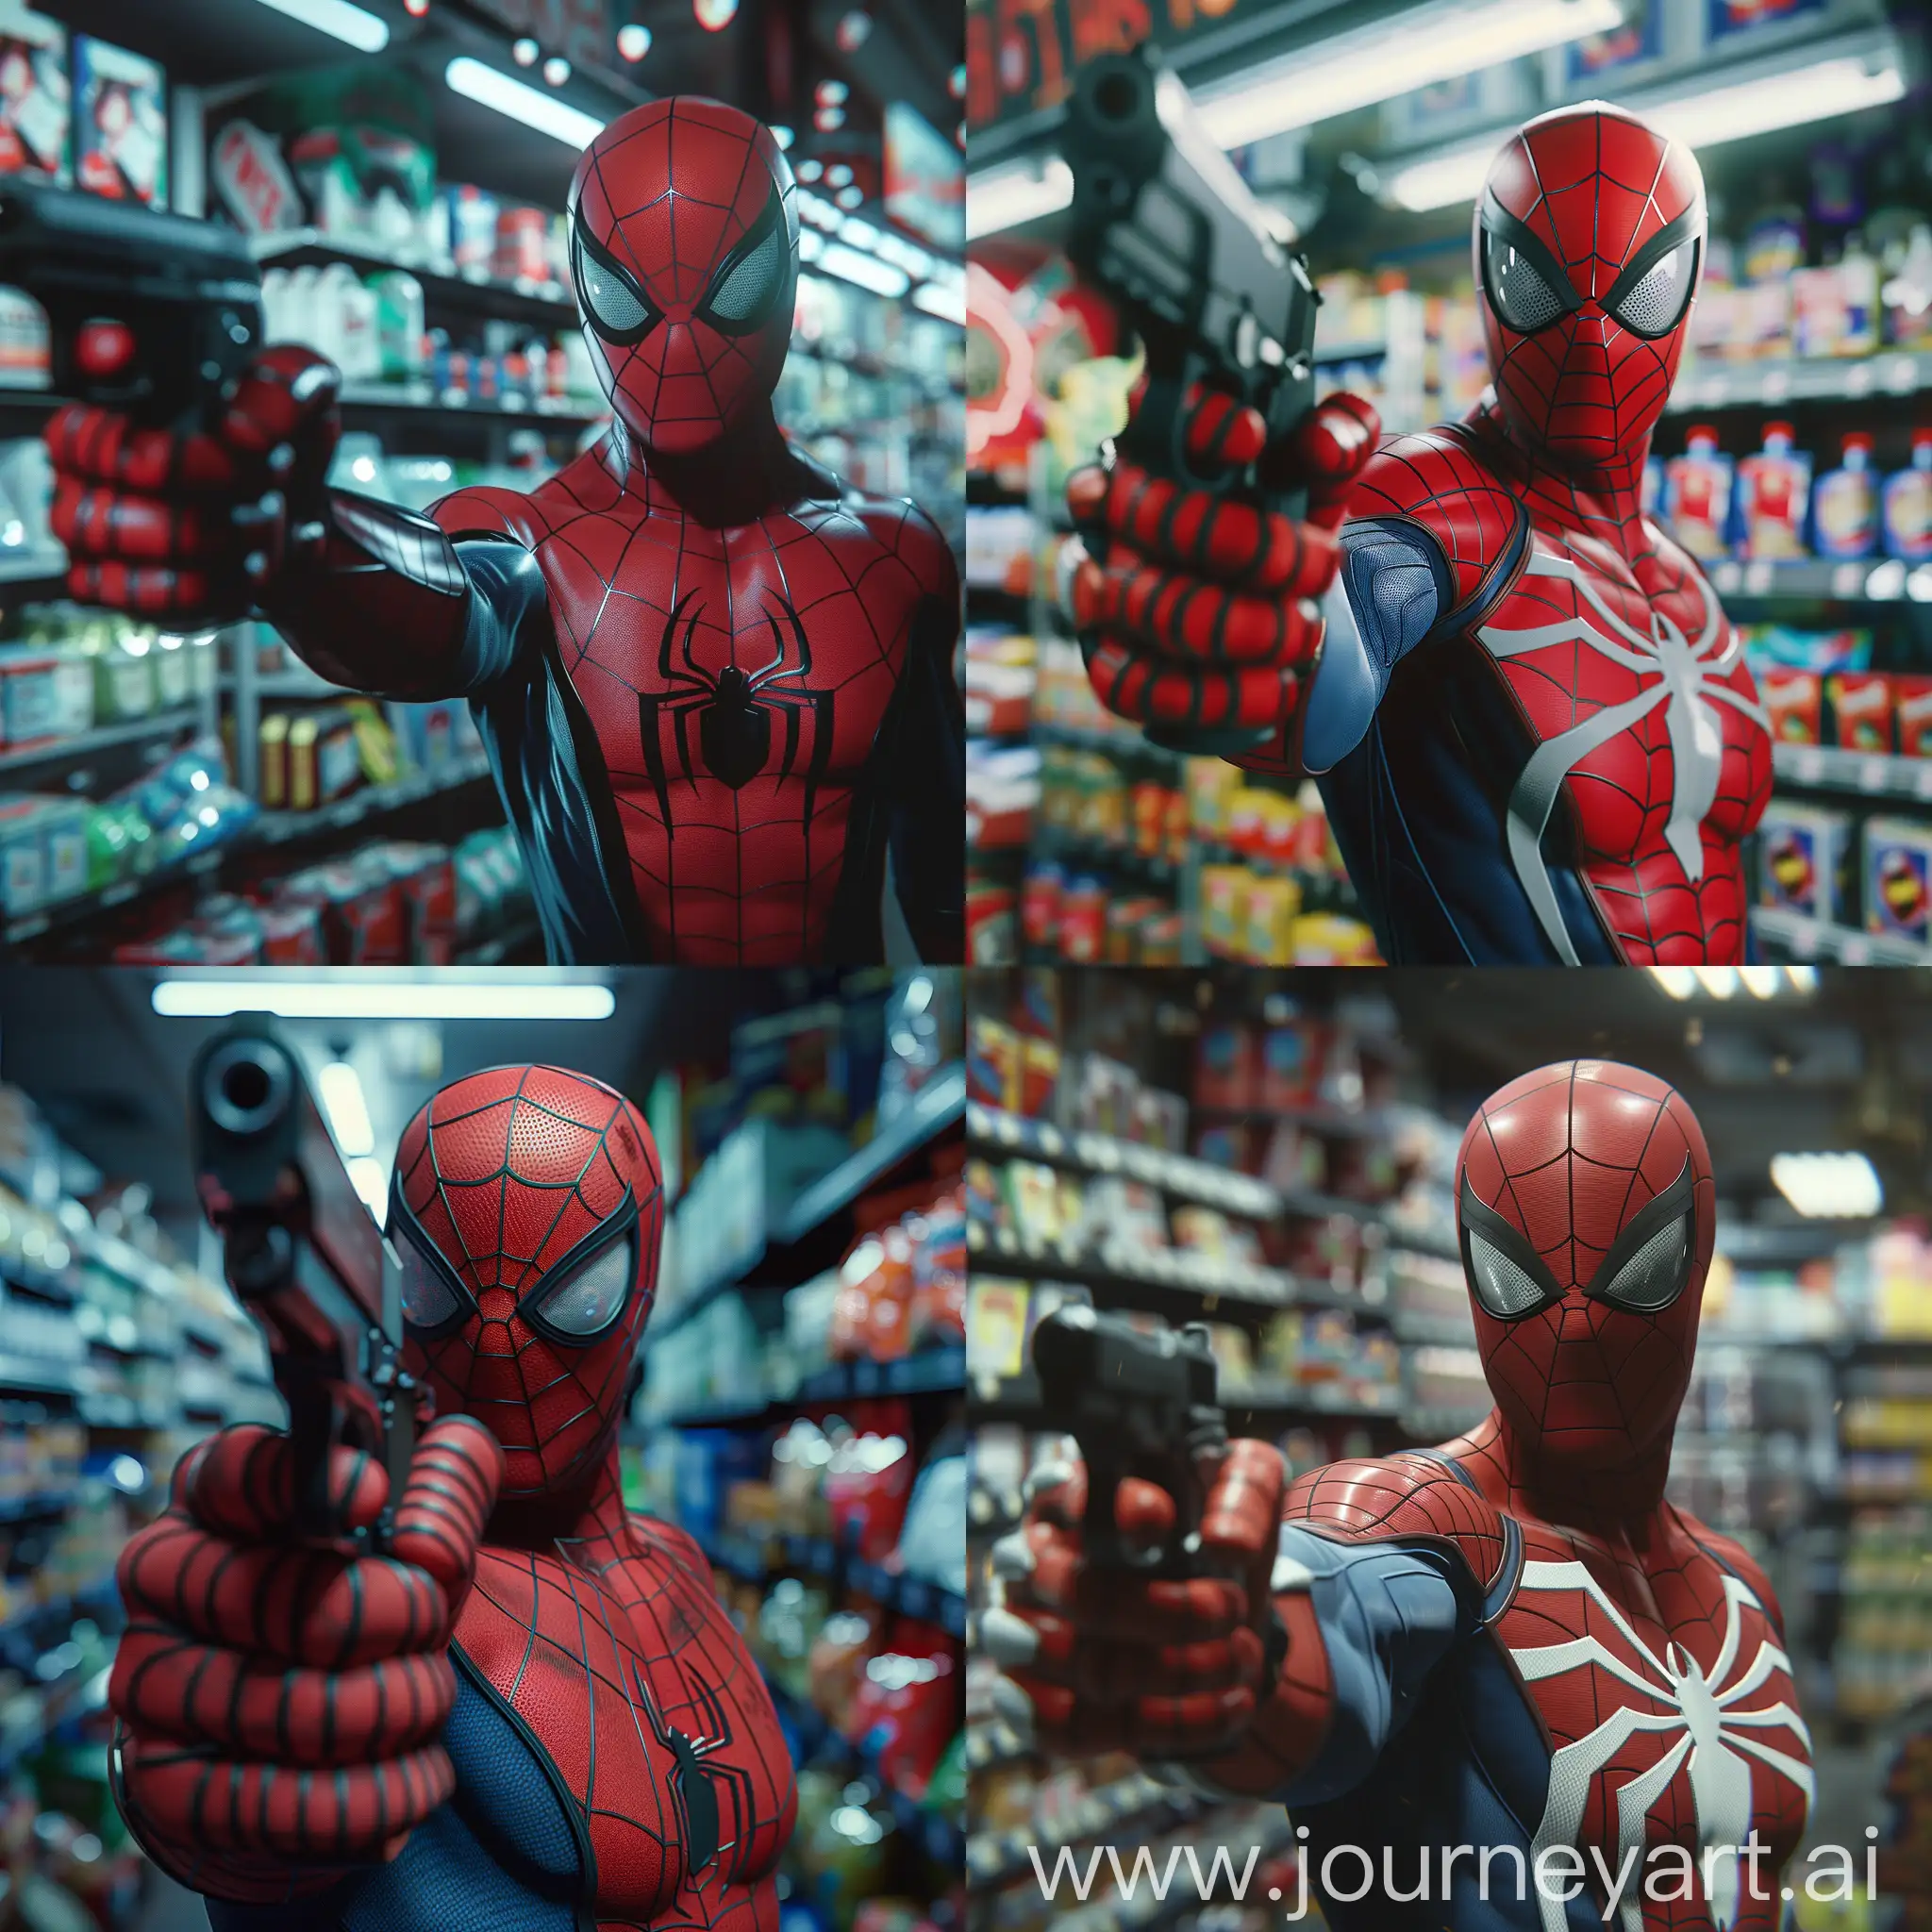 SpiderMan-Holding-Pistol-in-Store-at-Night-4K-Realistic-Scene